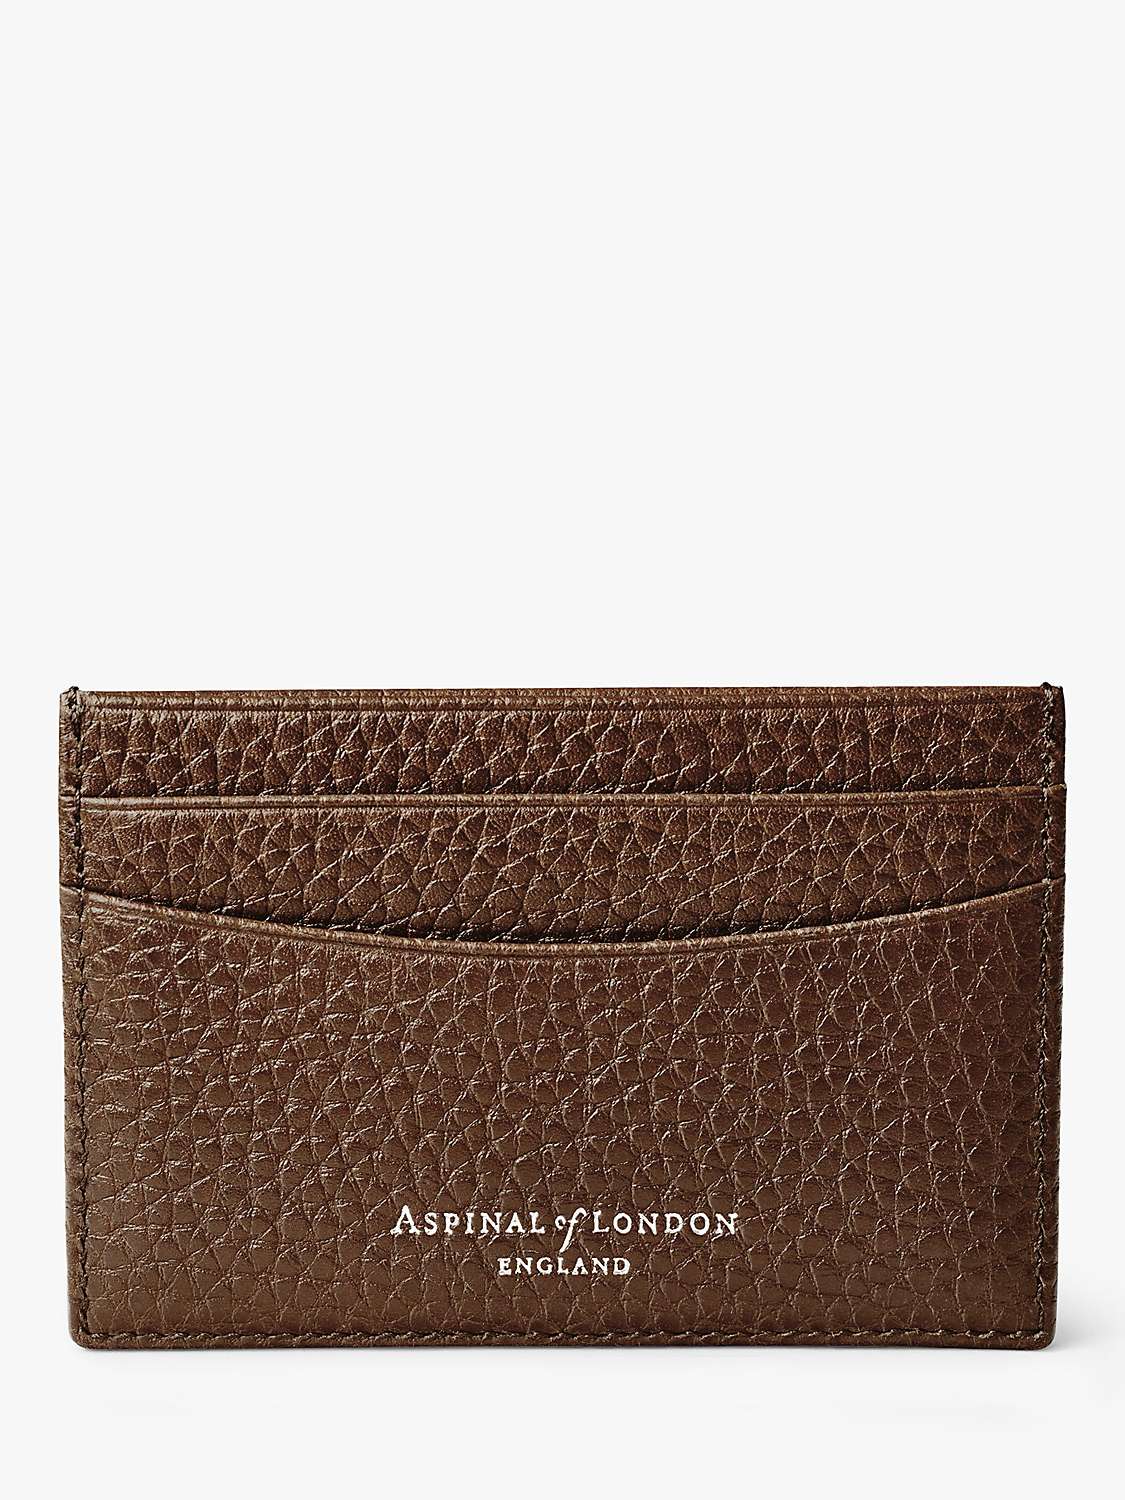 Buy Aspinal of London Pebble Leather Slim Credit Card Case Online at johnlewis.com